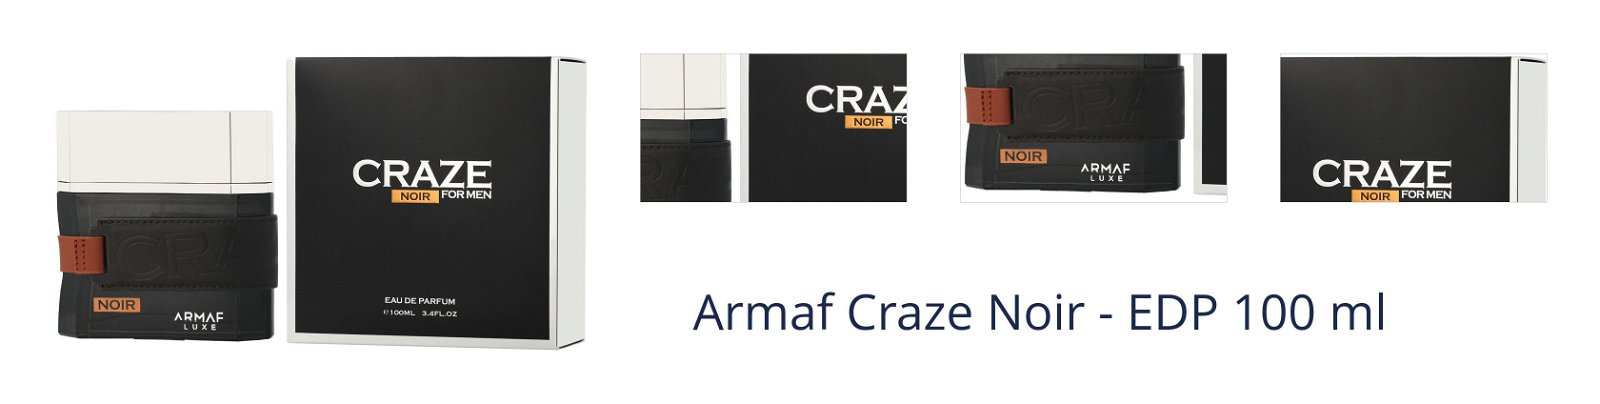 Armaf Craze Noir - EDP 100 ml 1